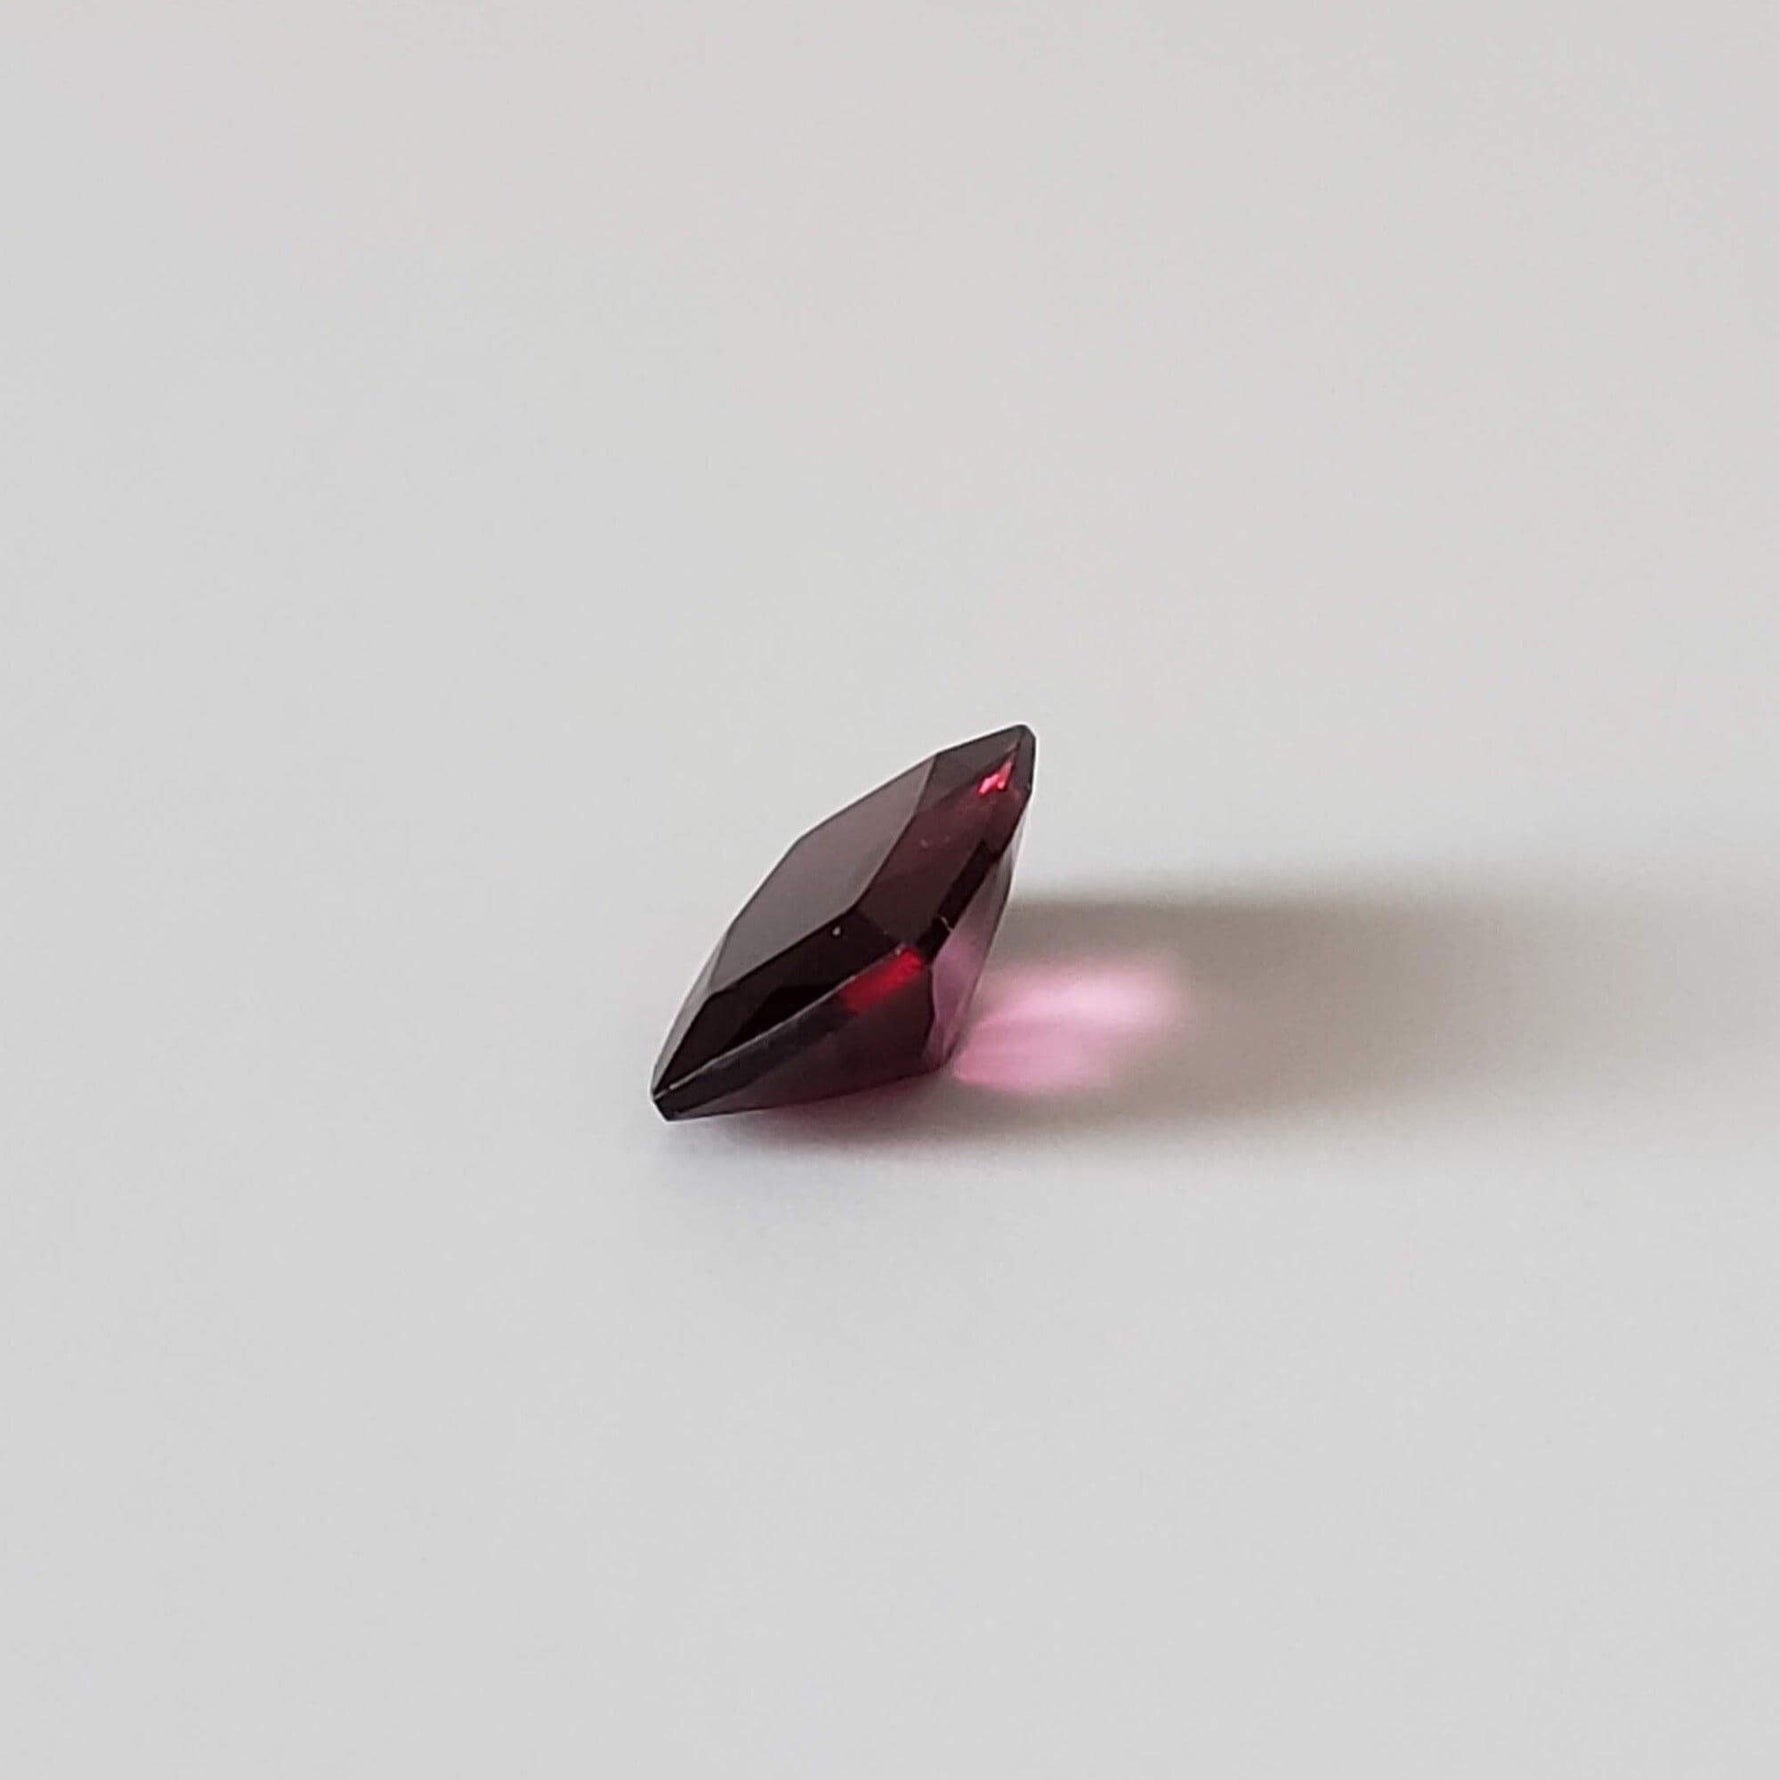 Rhodolite Garnet | Untreated Garnet | Antique Octagon Cut | Reddish Purple | 8x6mm